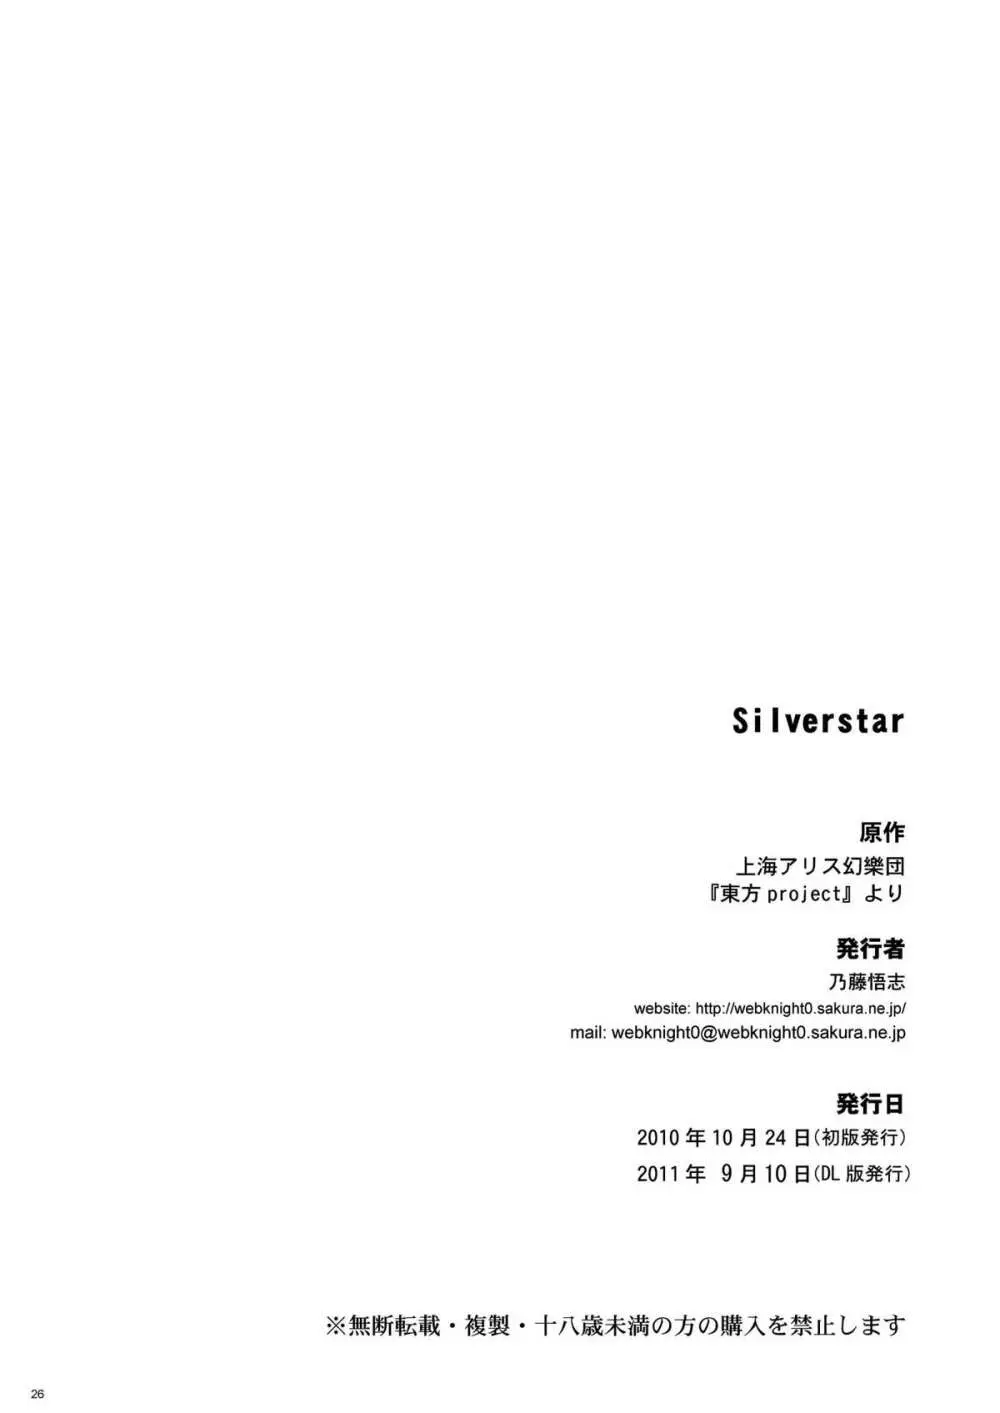 Silverstar 26ページ